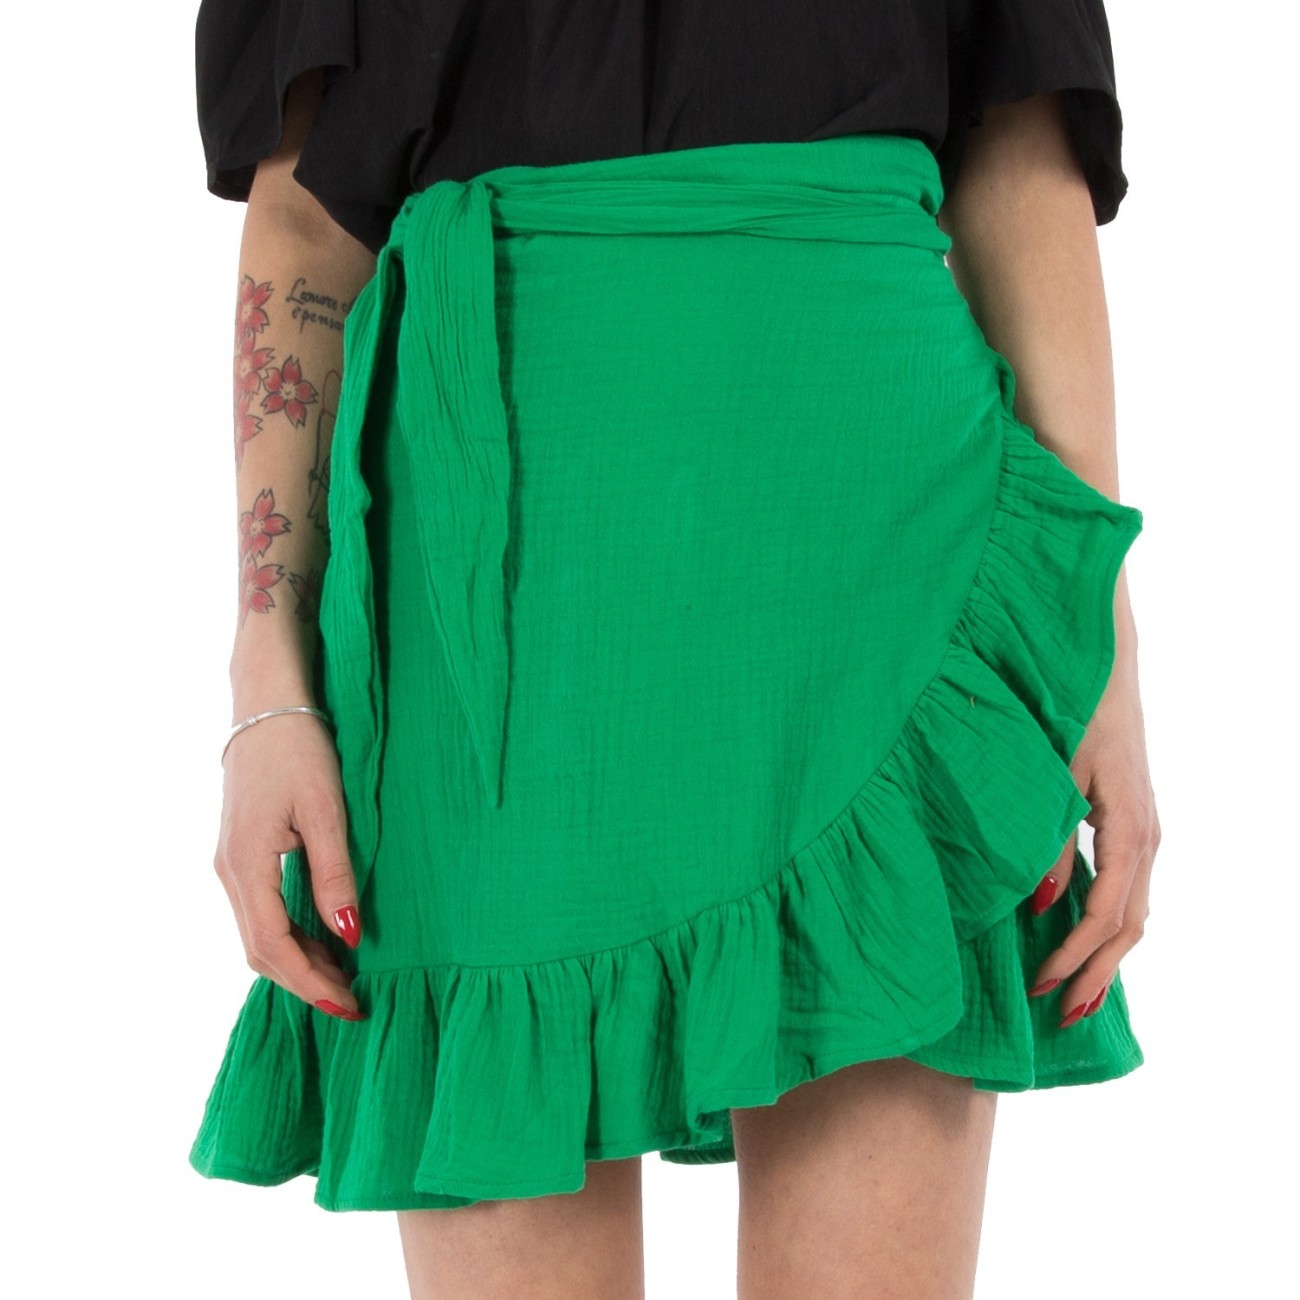 Short mint green skirt with...